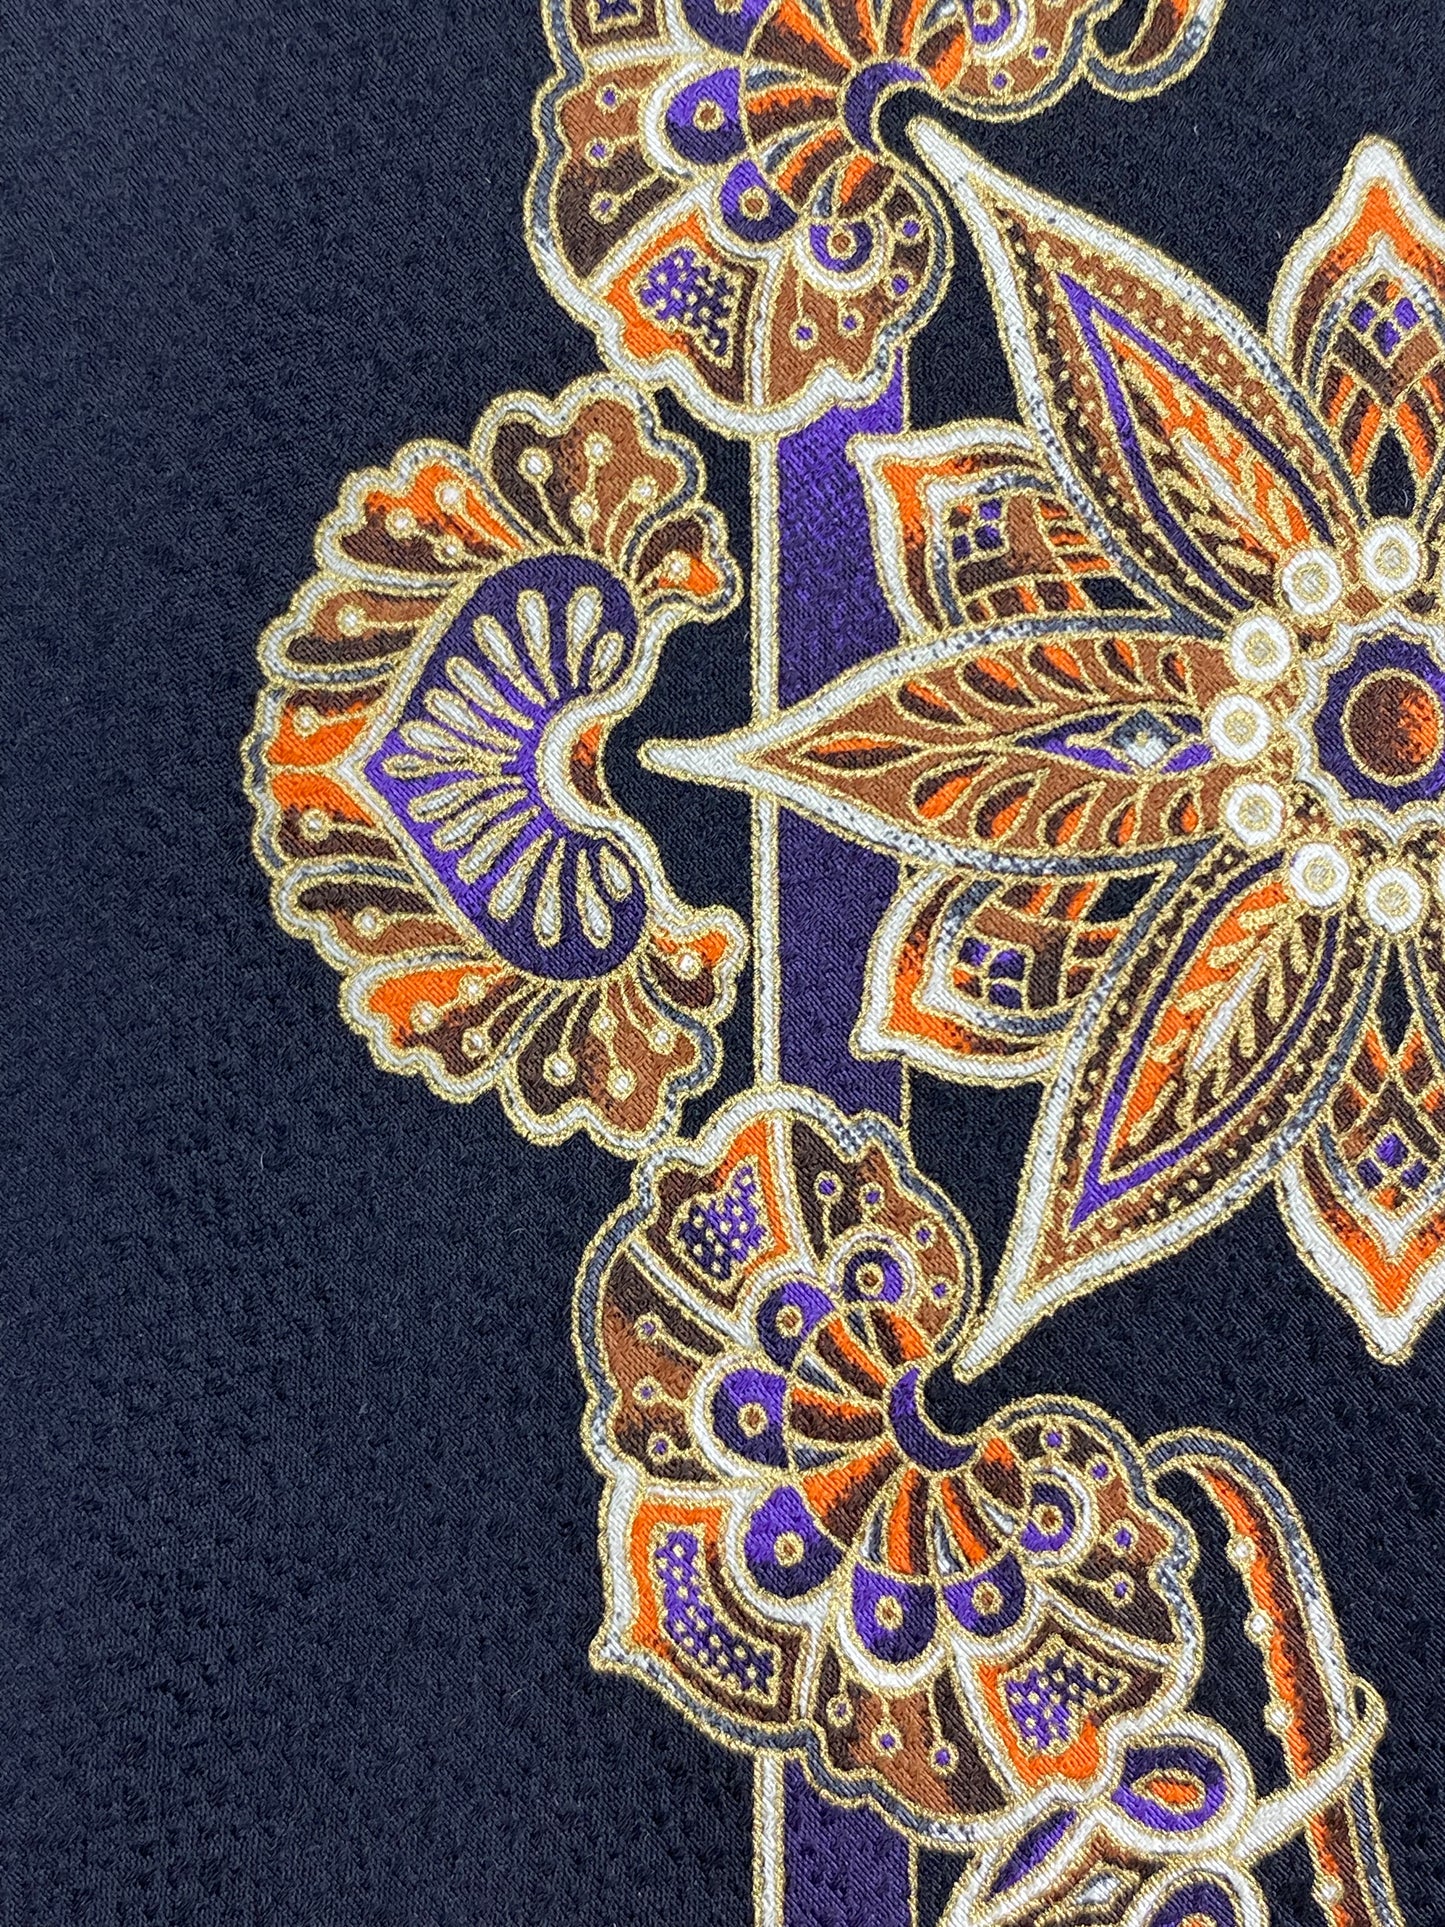 Close-up of: 90s Deadstock Silk Necktie, Men's Vintage Purple/ Gold Floral Oriental Pattern Tie, NOS